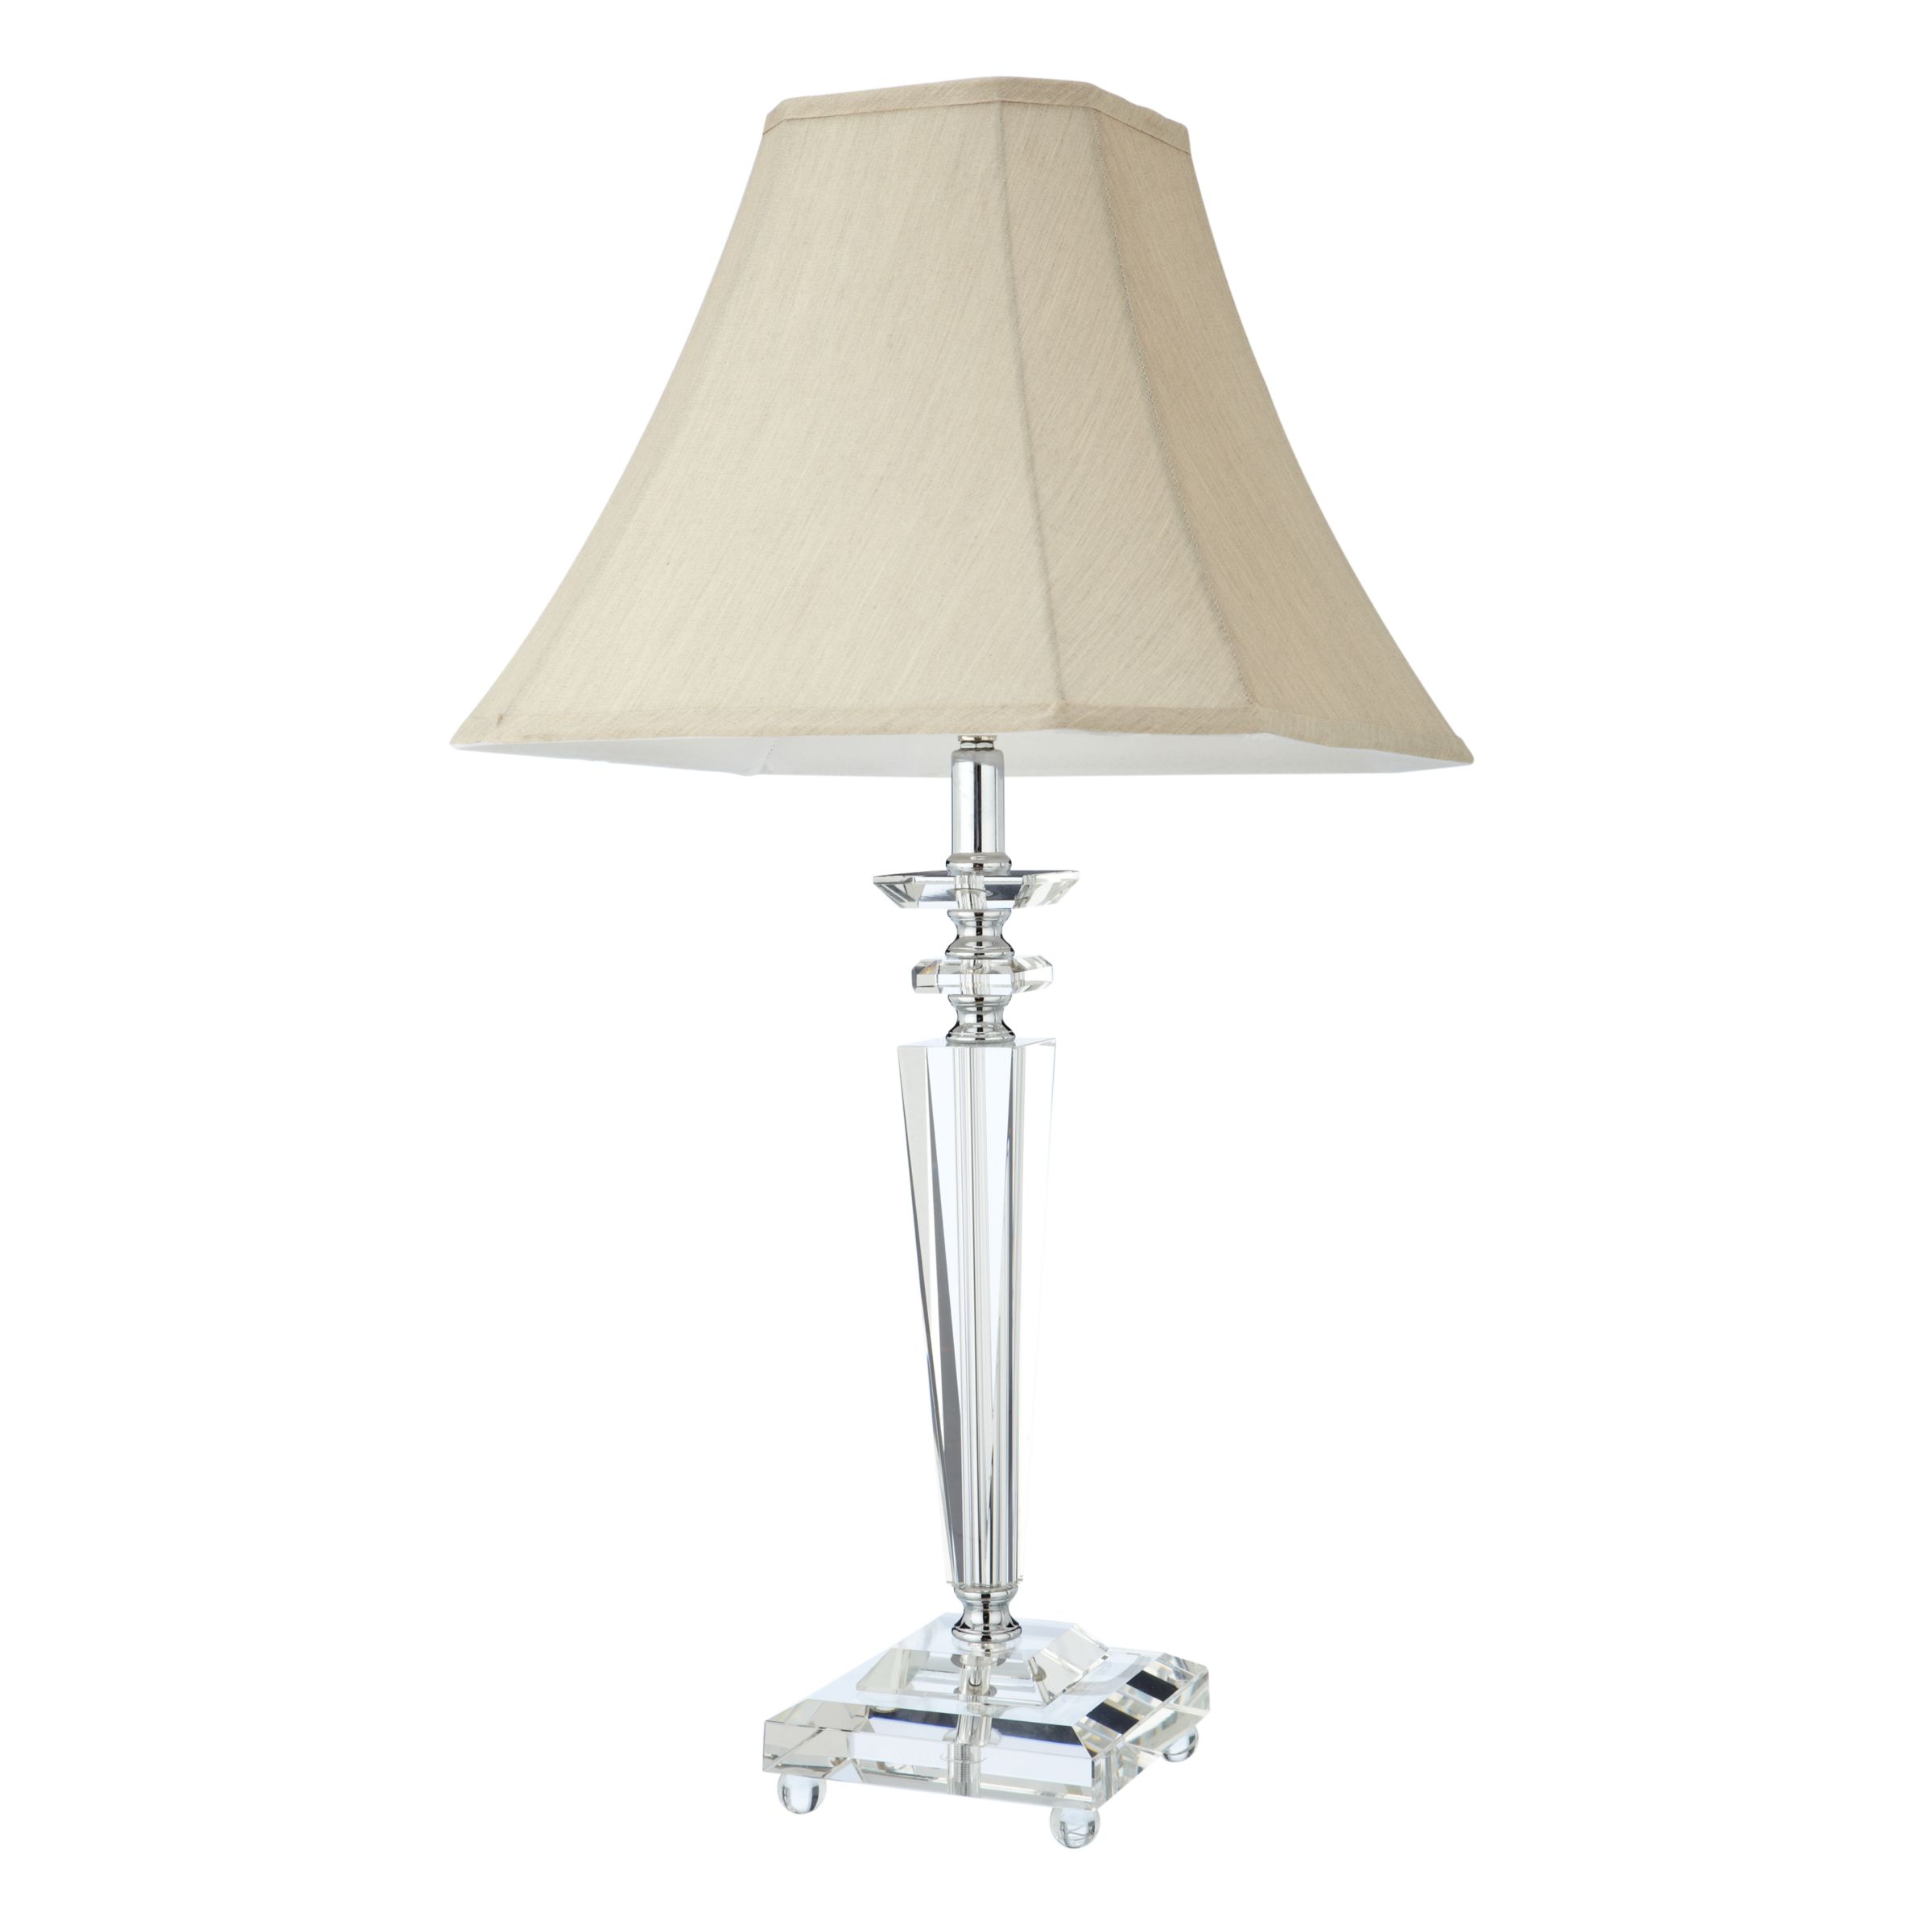 Hattie Table Lamp 154411